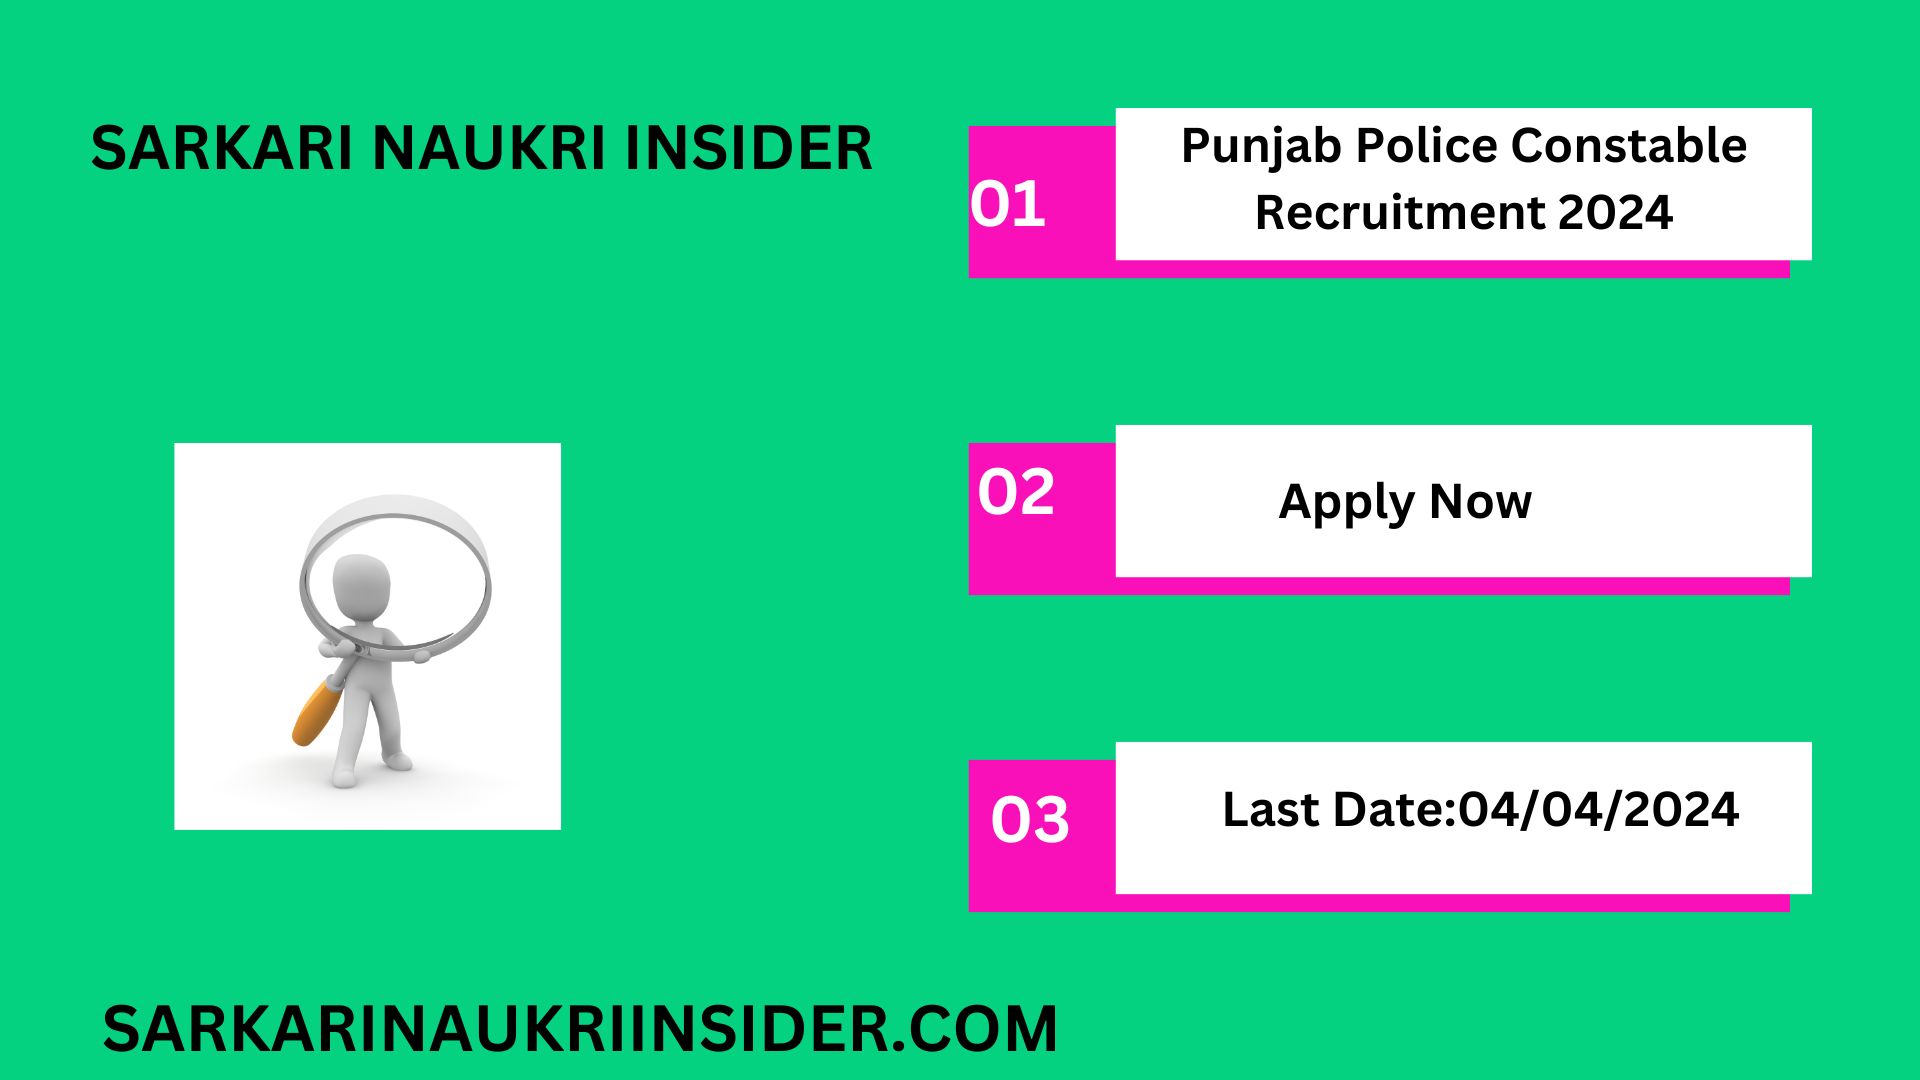 Punjab Police Constable Recruitment 2024 